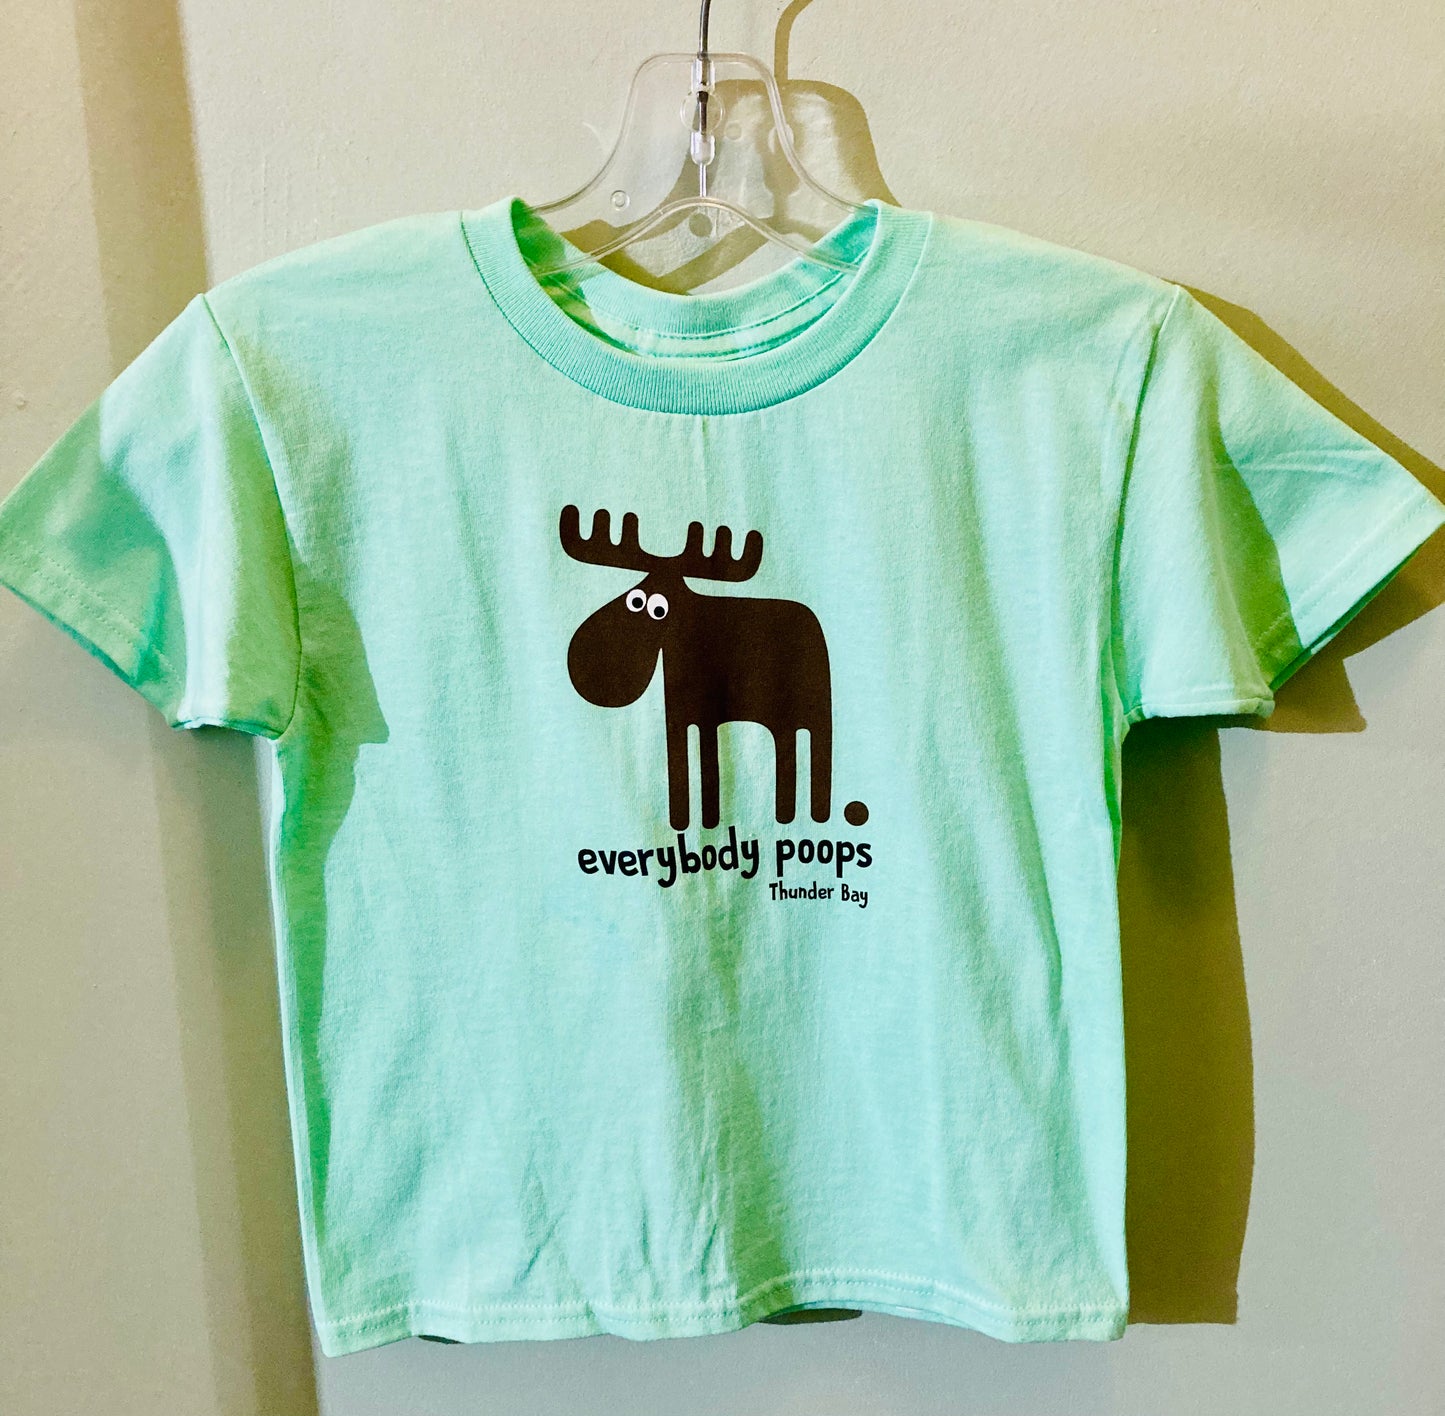 Kid's T-shirt - "Everybody Poops", Thunder Bay - Mint Green